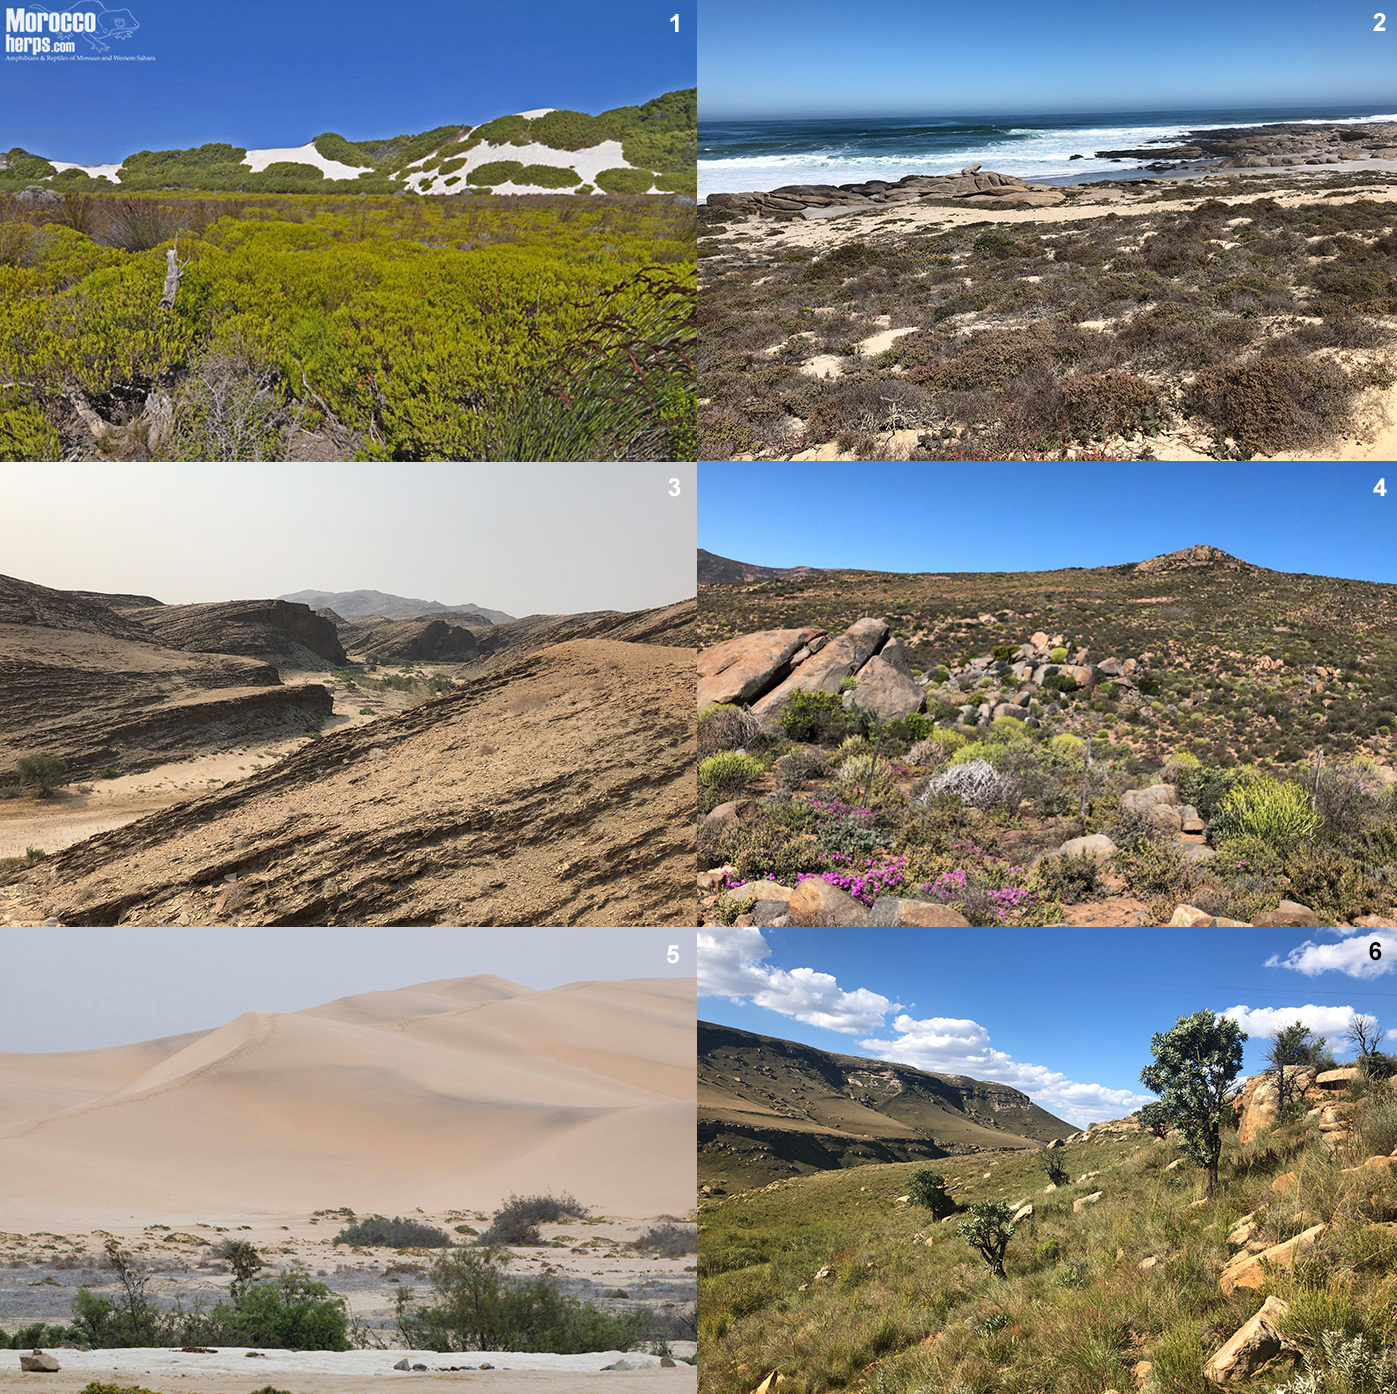 habitat-calechidna-fynbos-namaqualand-namibia-atropos-caudalis-cornuta-peringueyi-schneideri